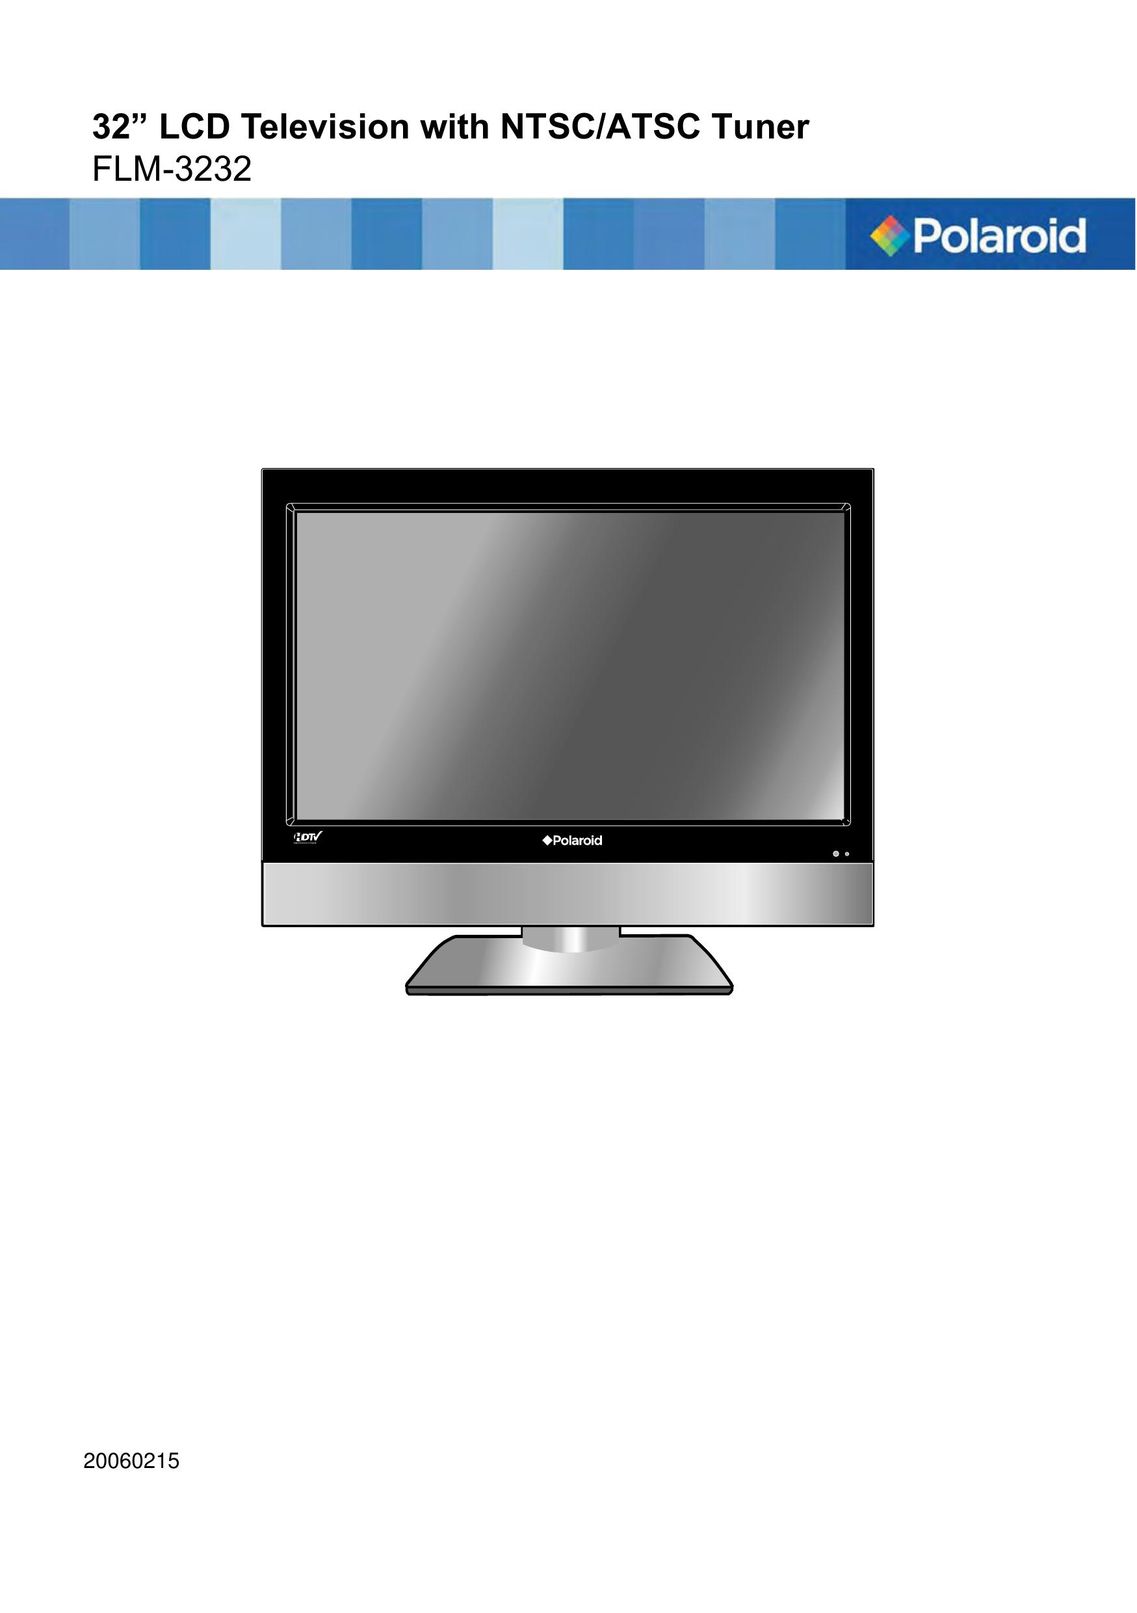 Polaroid FLM-3232 Flat Panel Television User Manual